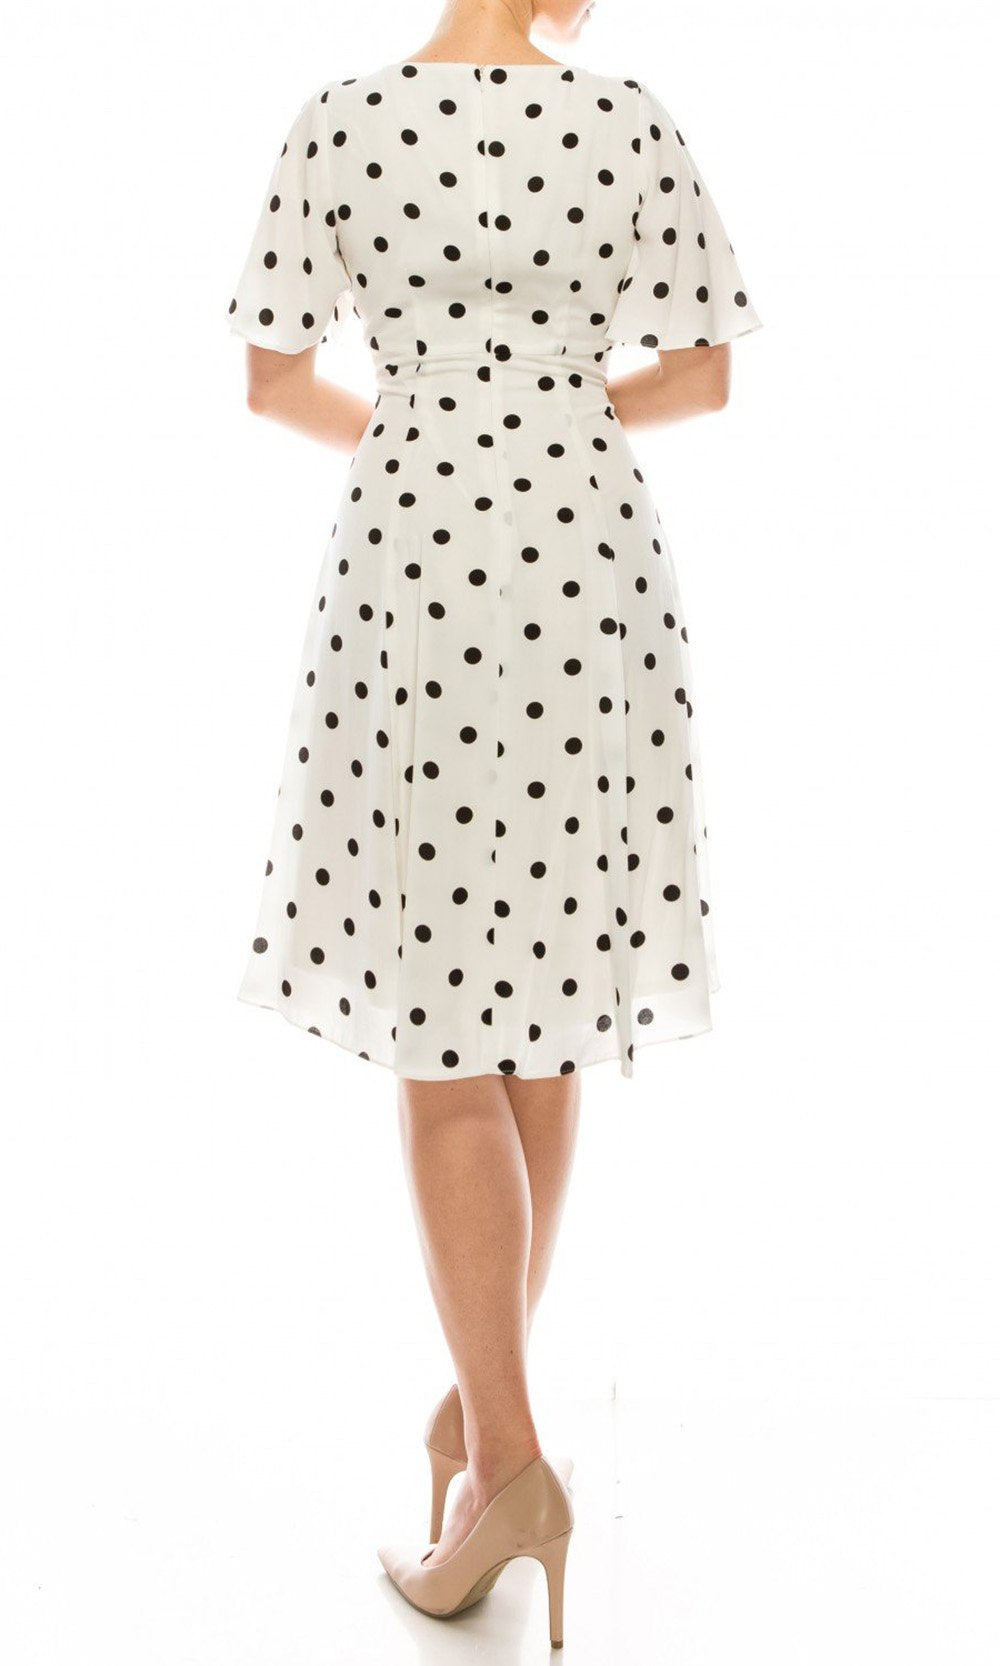 Gabby Skye - 19463M Flounce Sleeve Polka Dot A-Line Dress In White and Black